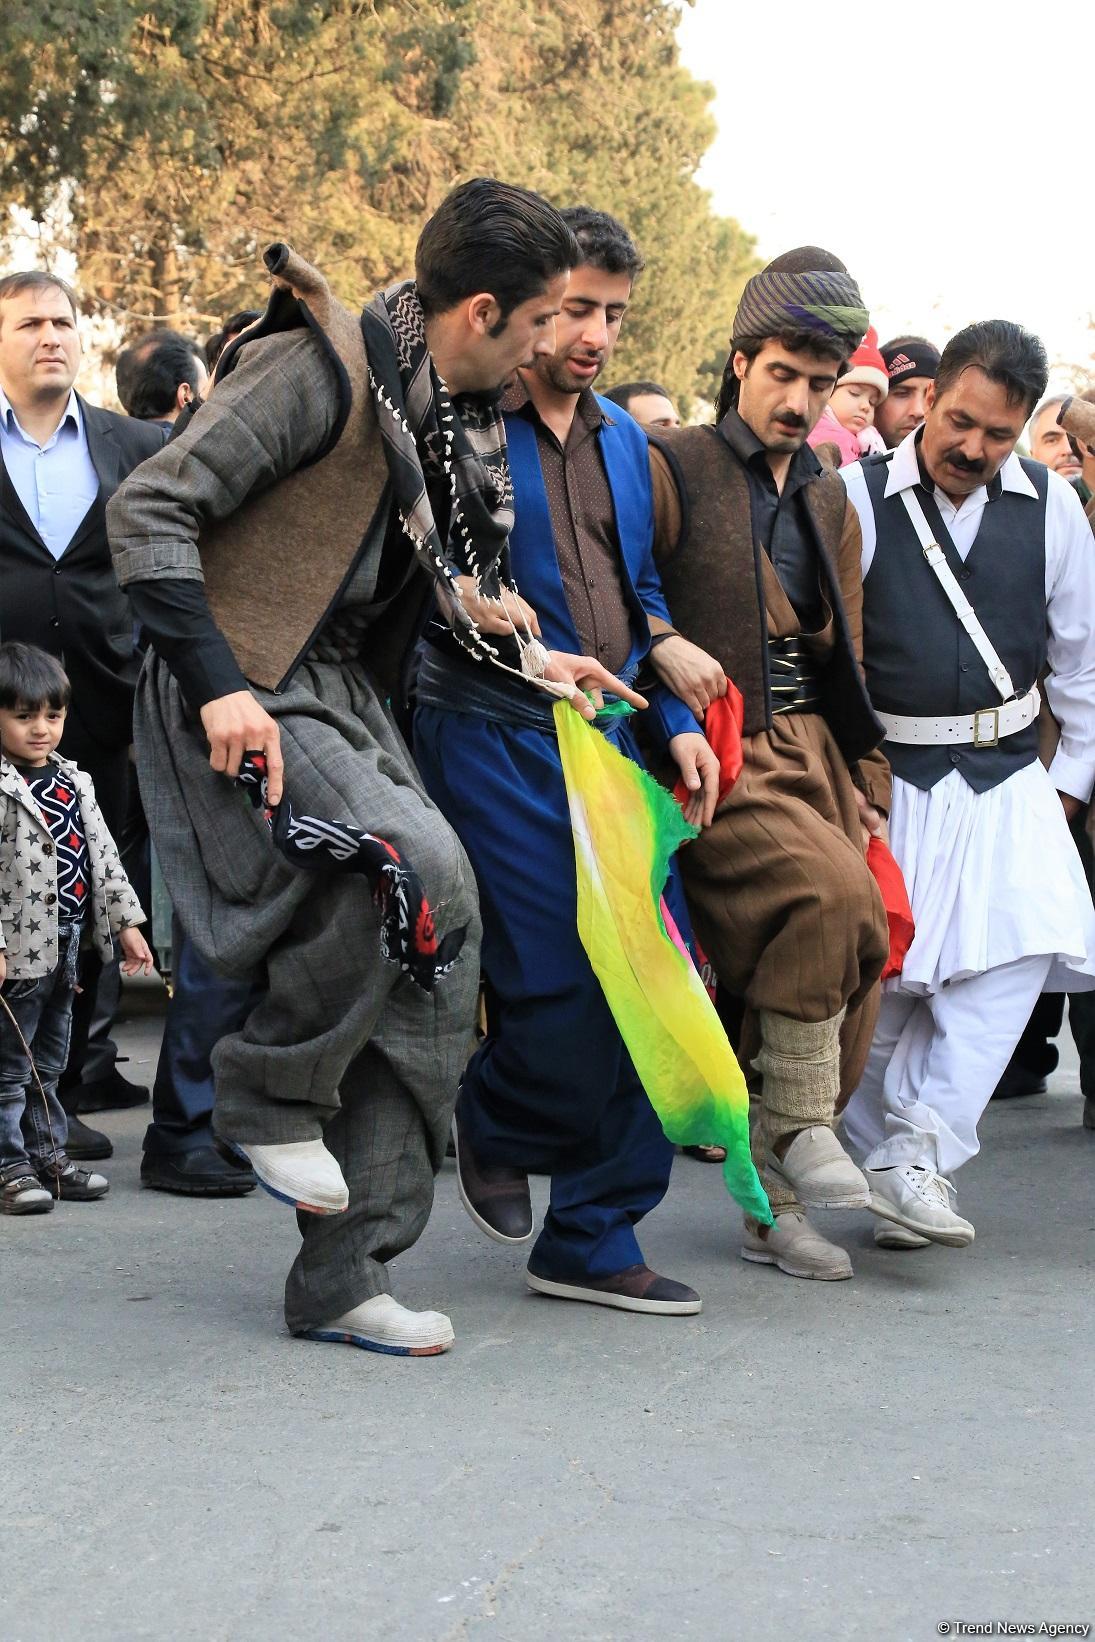 Iran's nomadic tribes dance to unity (PHOTO)